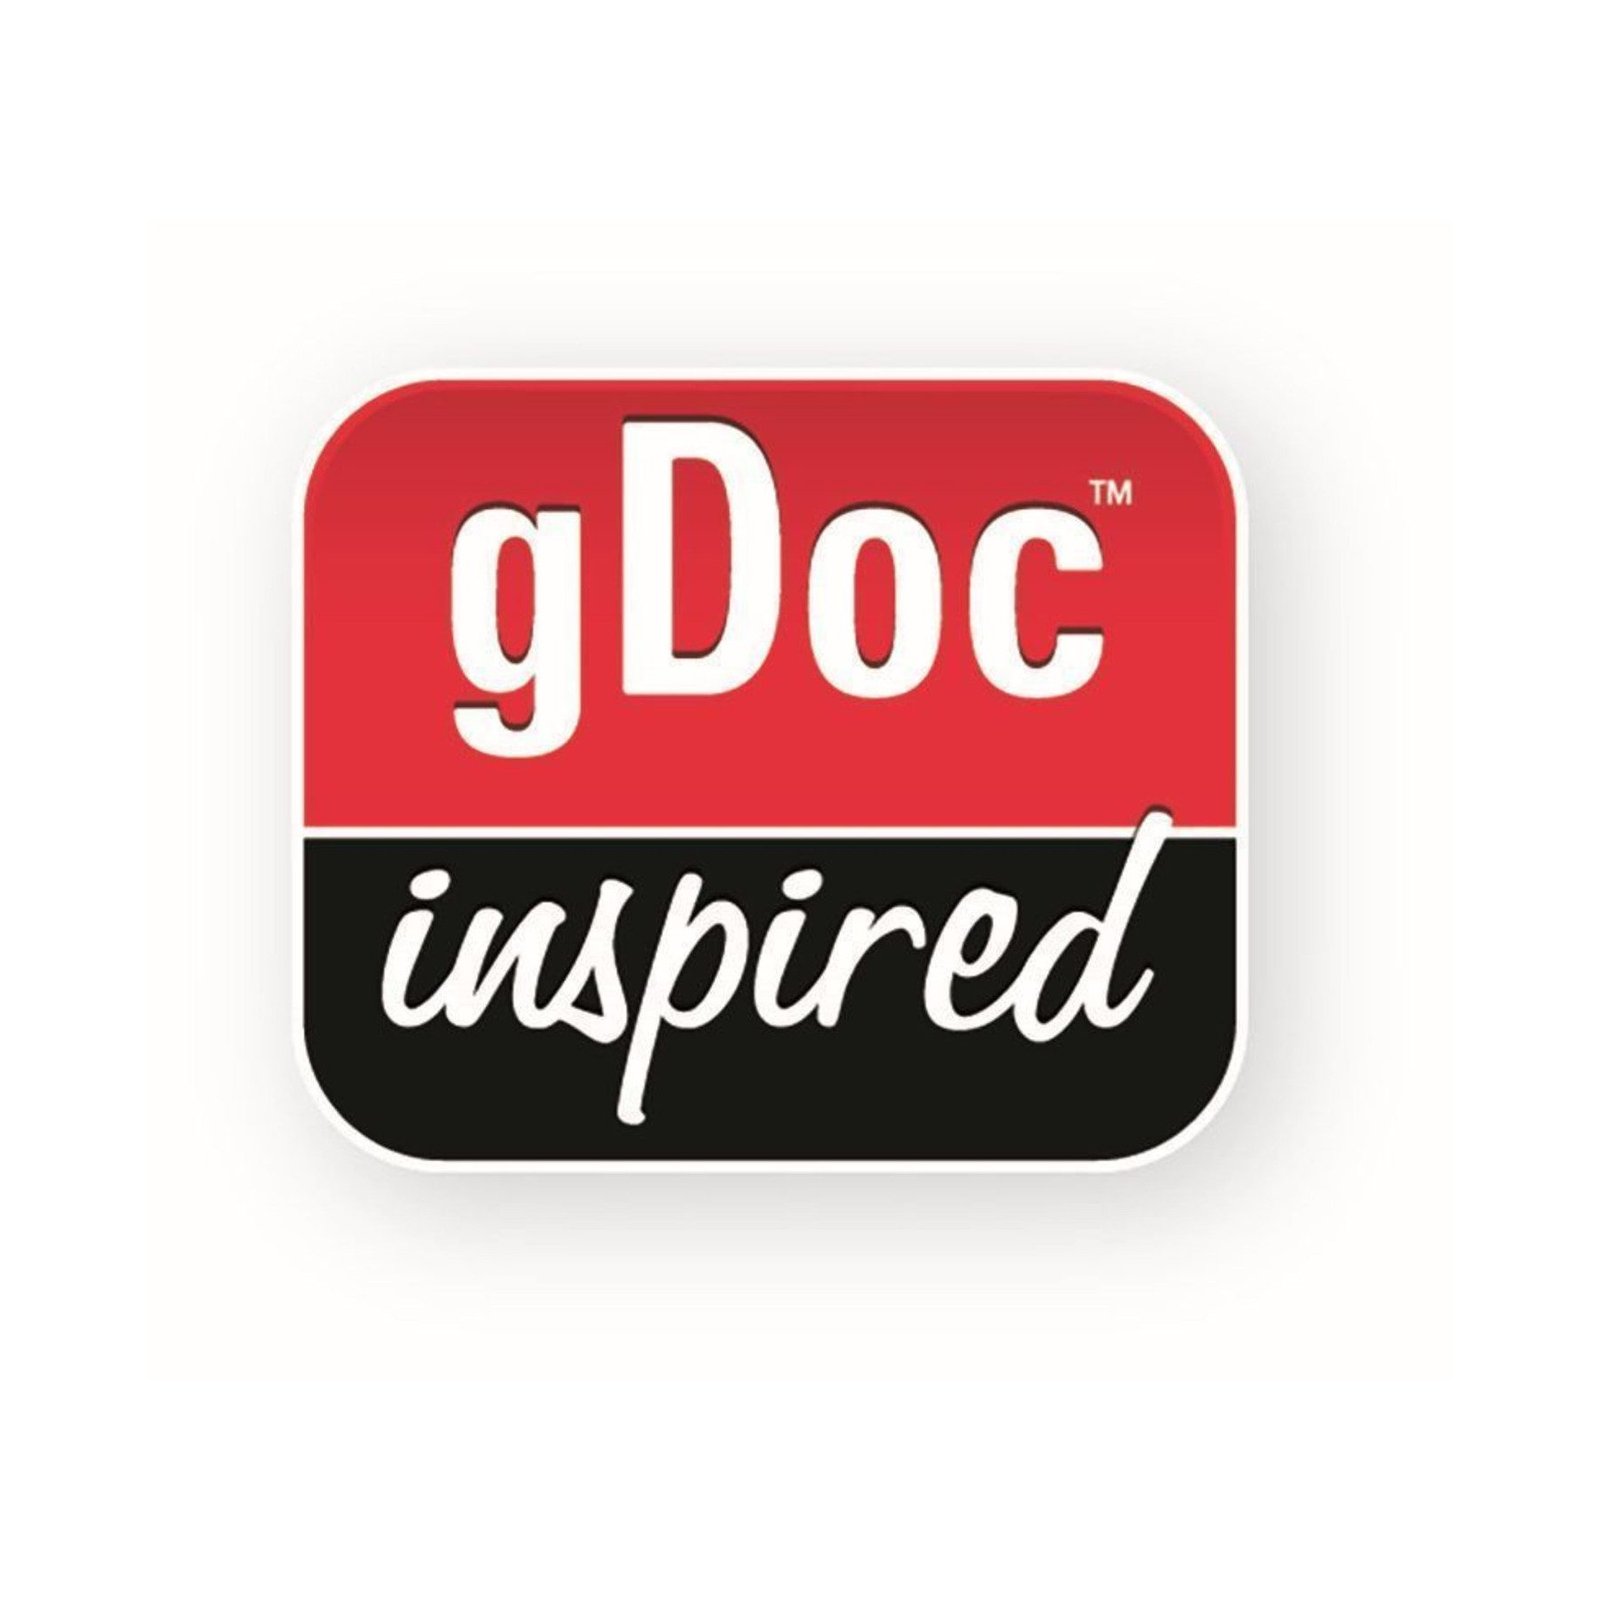 Streamline Your Documents with gDoc Binder